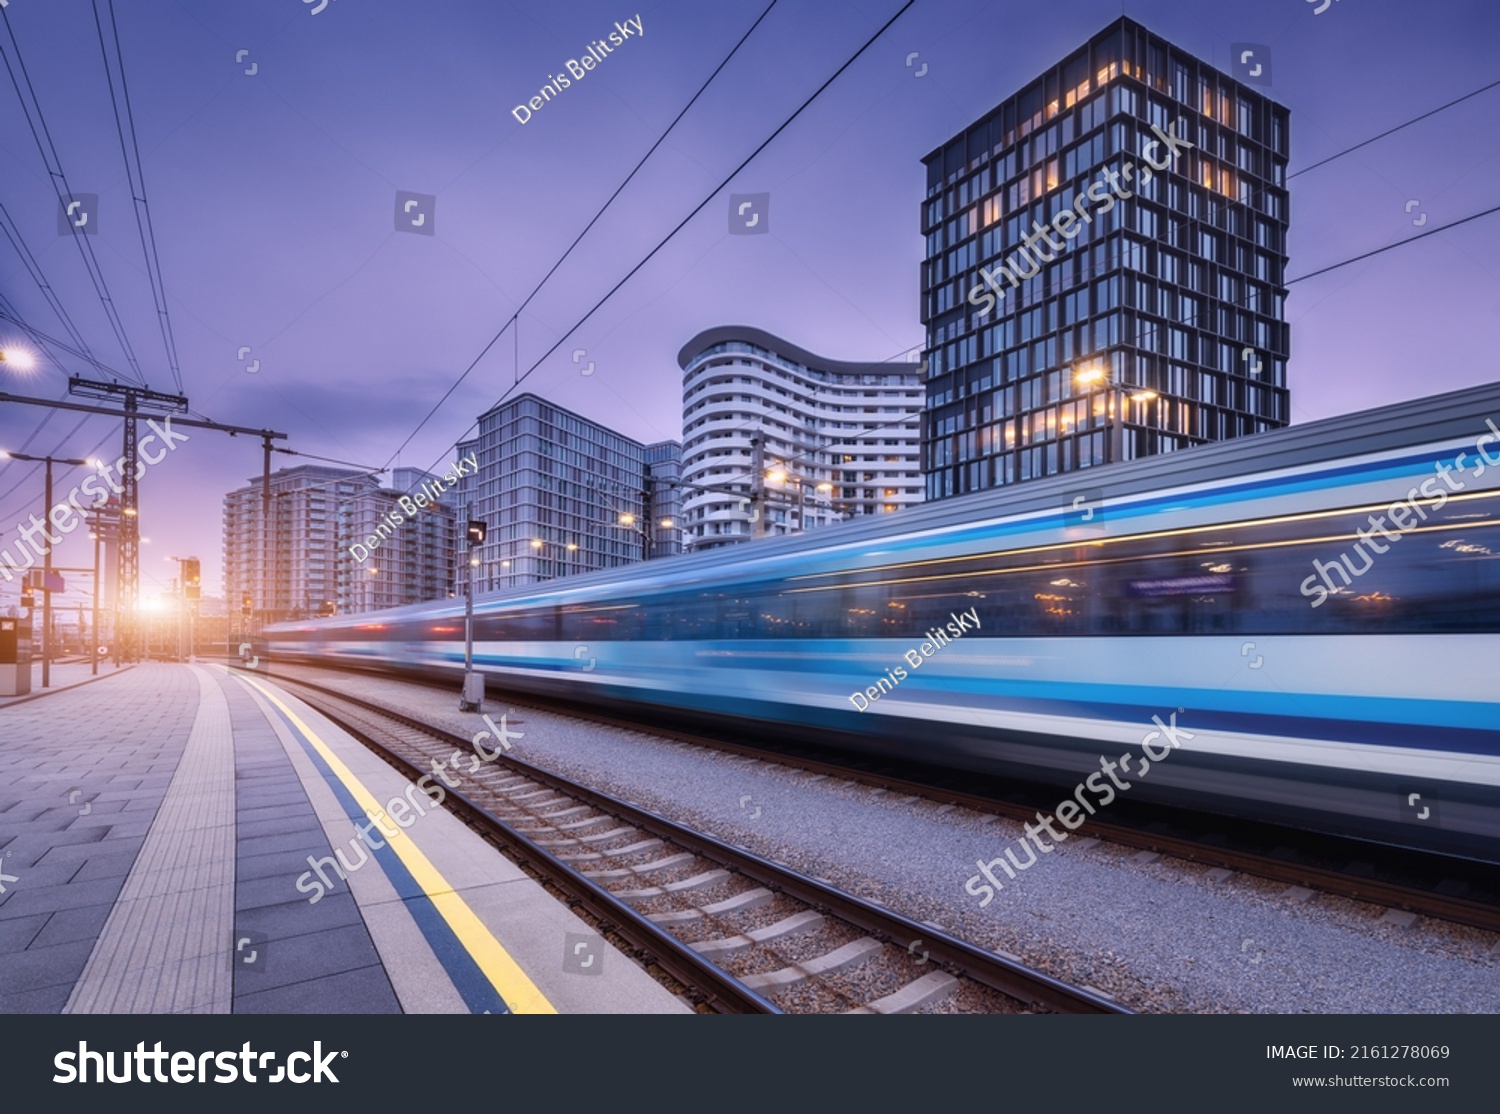 High speed train in motion on the railway station at sunset. Moving blue modern intercity passenger train, railway platform, buildings, city lights. Railroad in Vienna, Austria. Railway transportation #2161278069